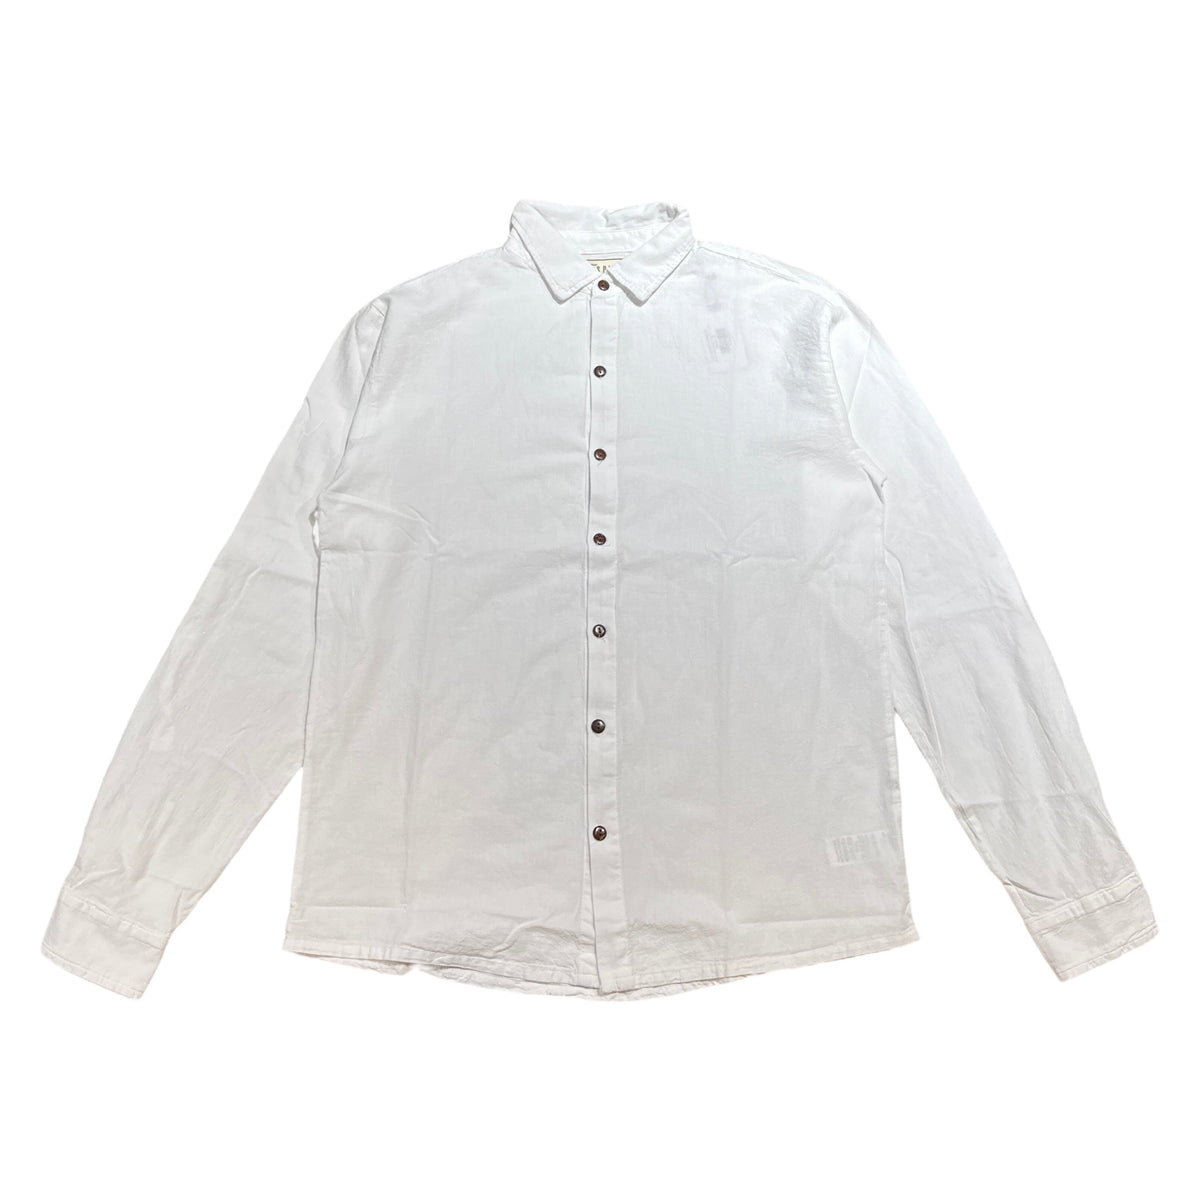 Seaspice White Peruvian Cotton Button Up Shirt